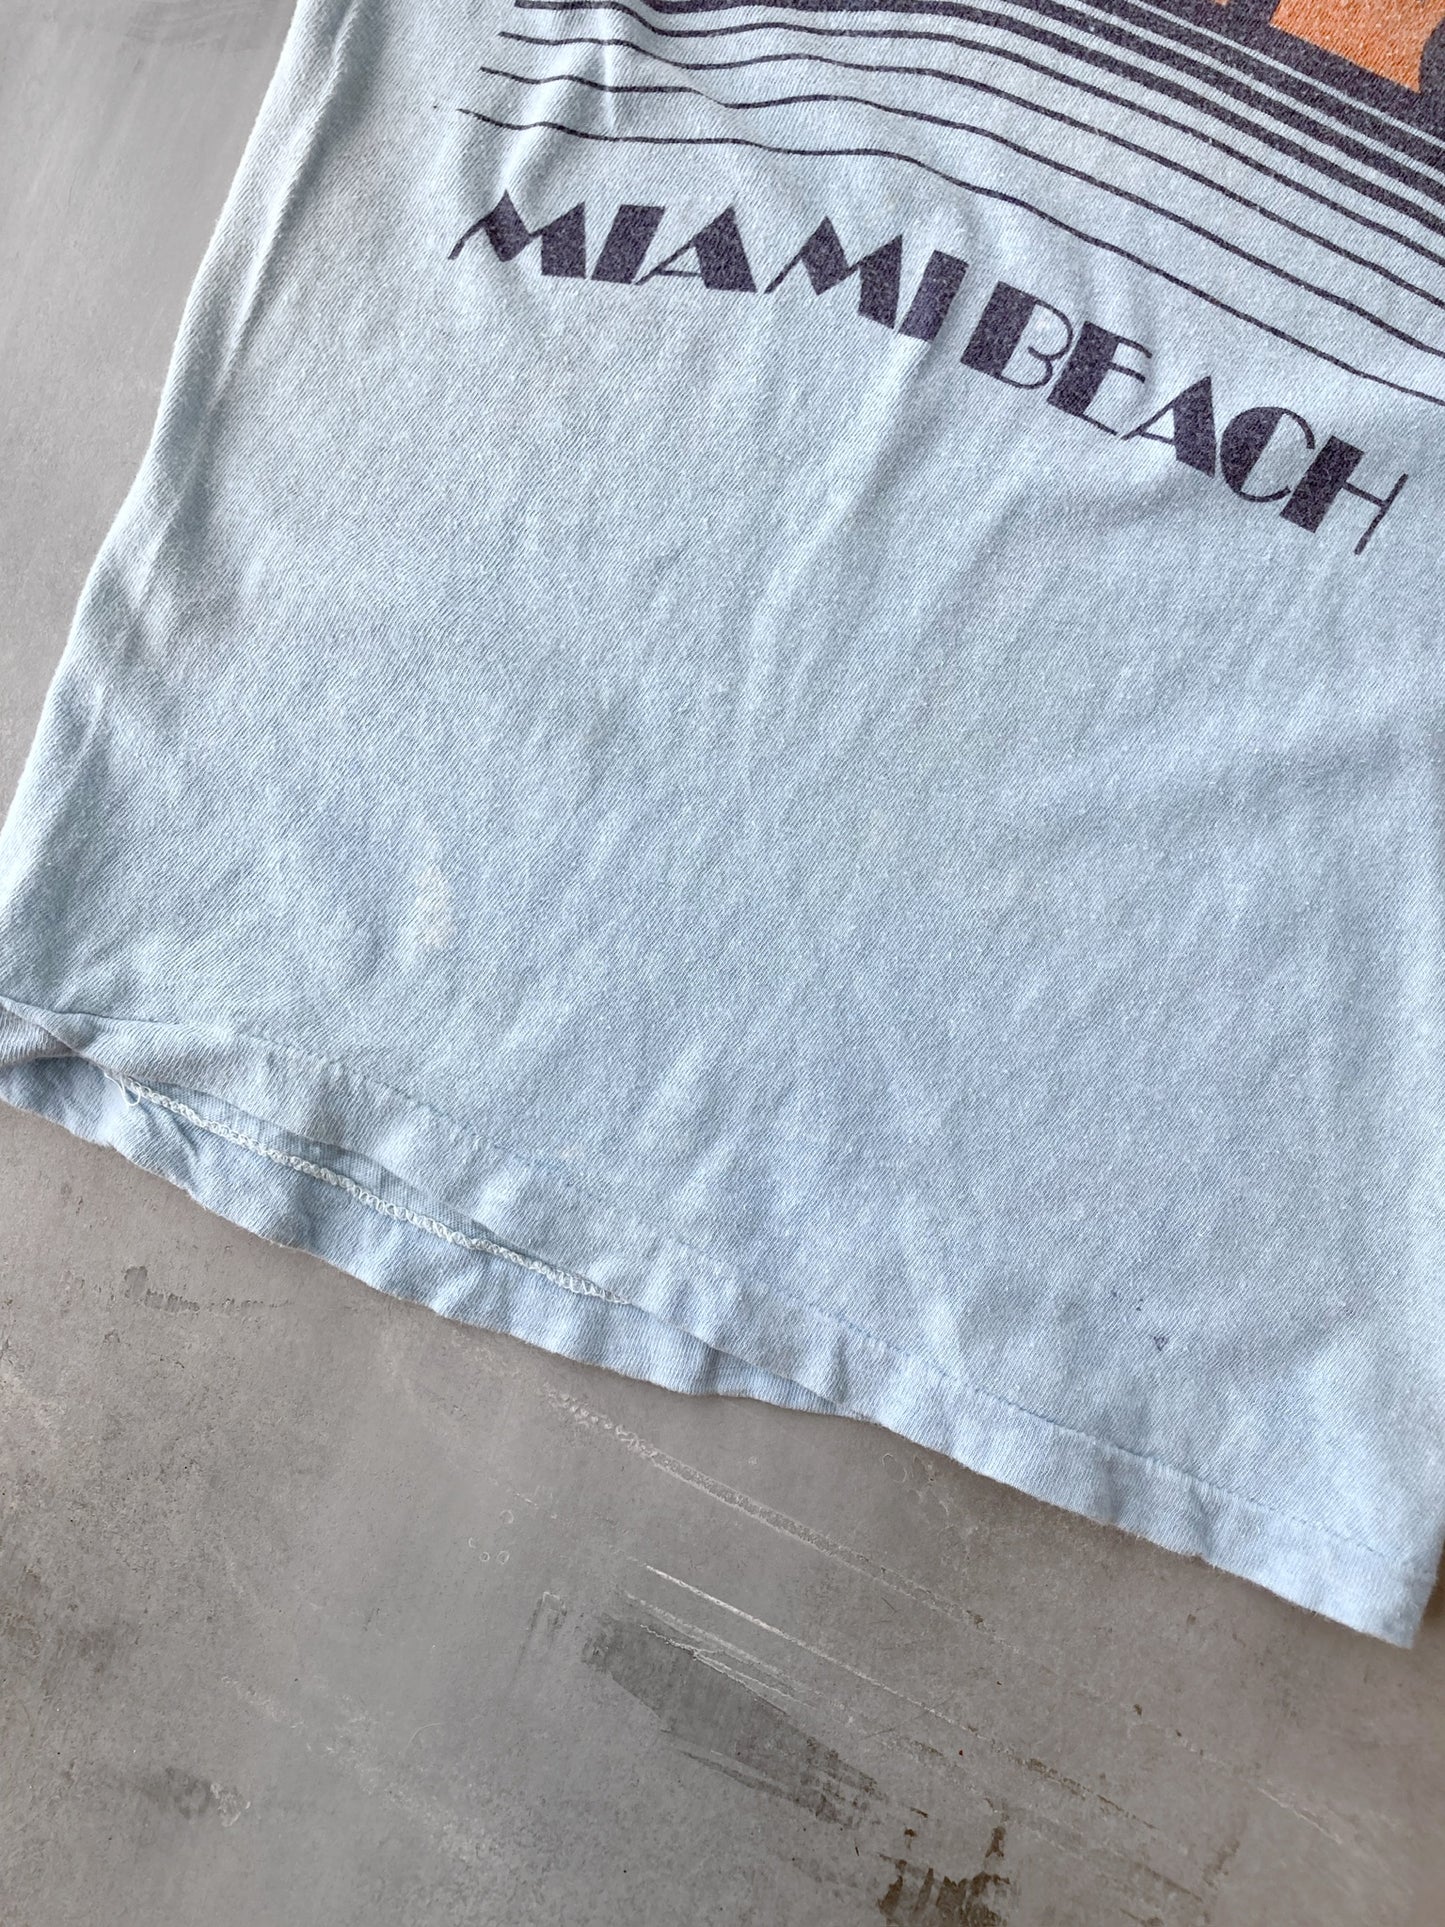 Miami Beach T-Shirt 80's - Small / Medium